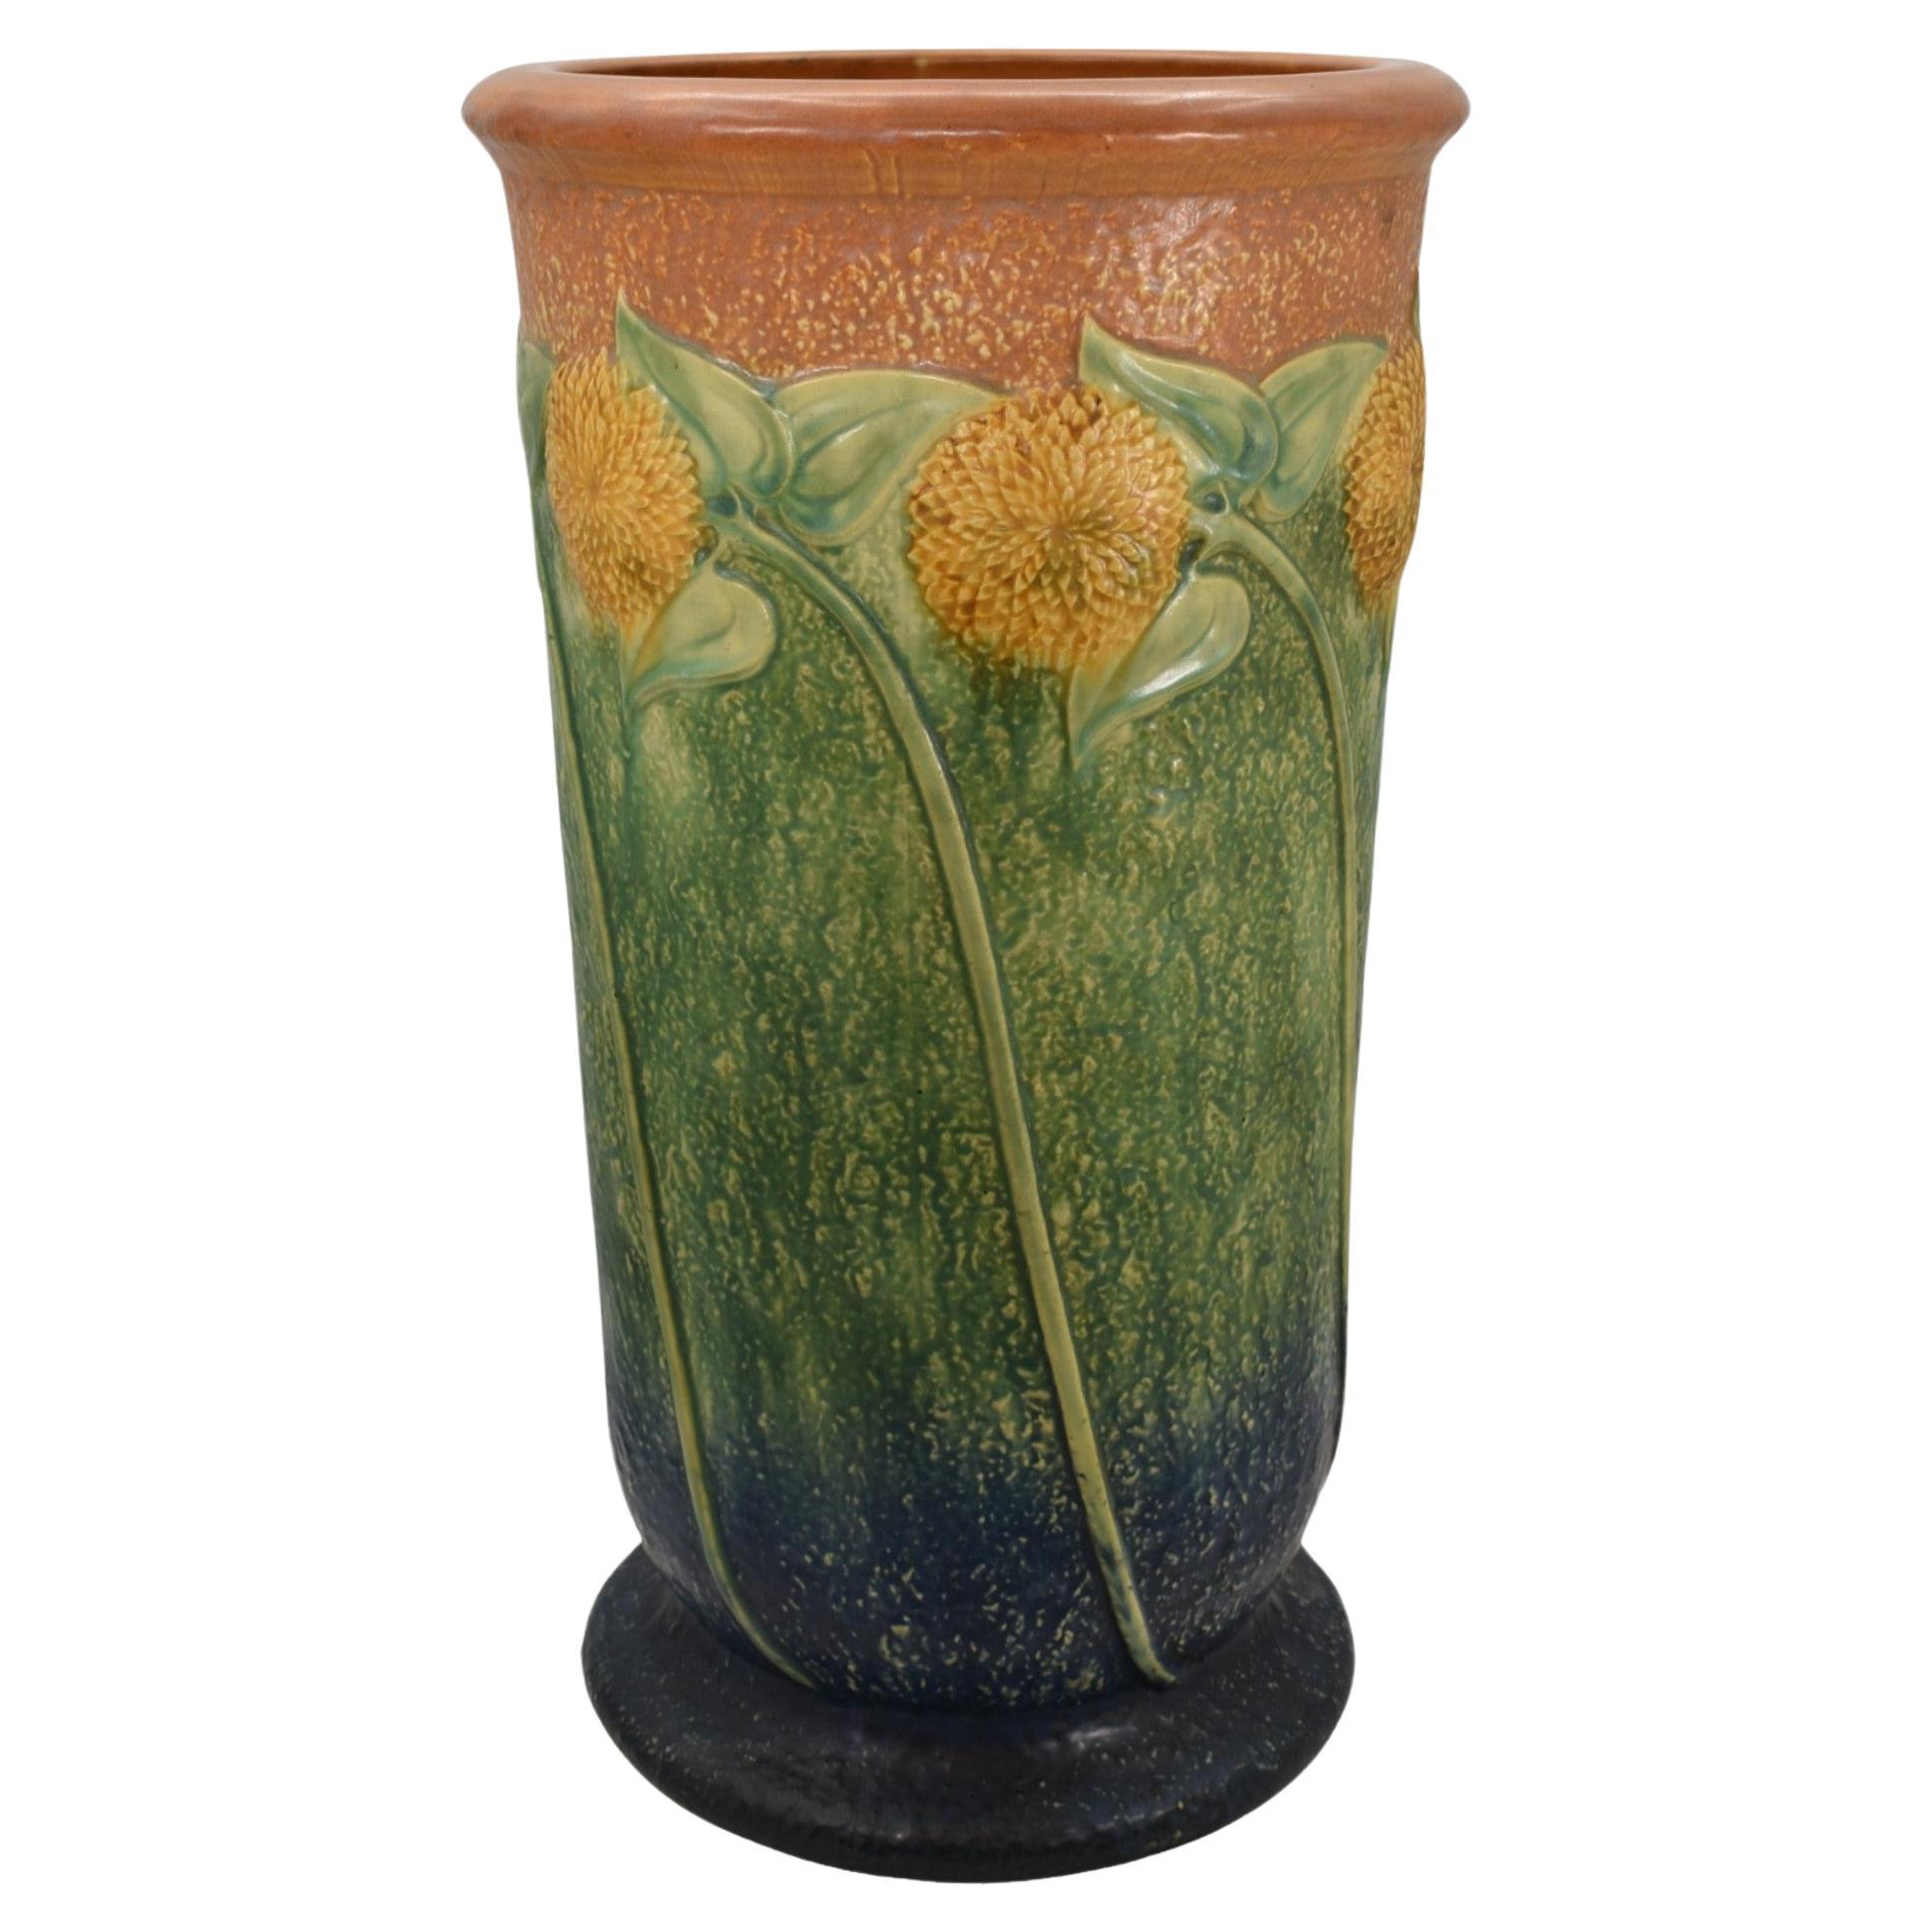 Roseville Sunflower 1930 Vintage Arts And Crafts Ceramic Umbrella Stand 770-20